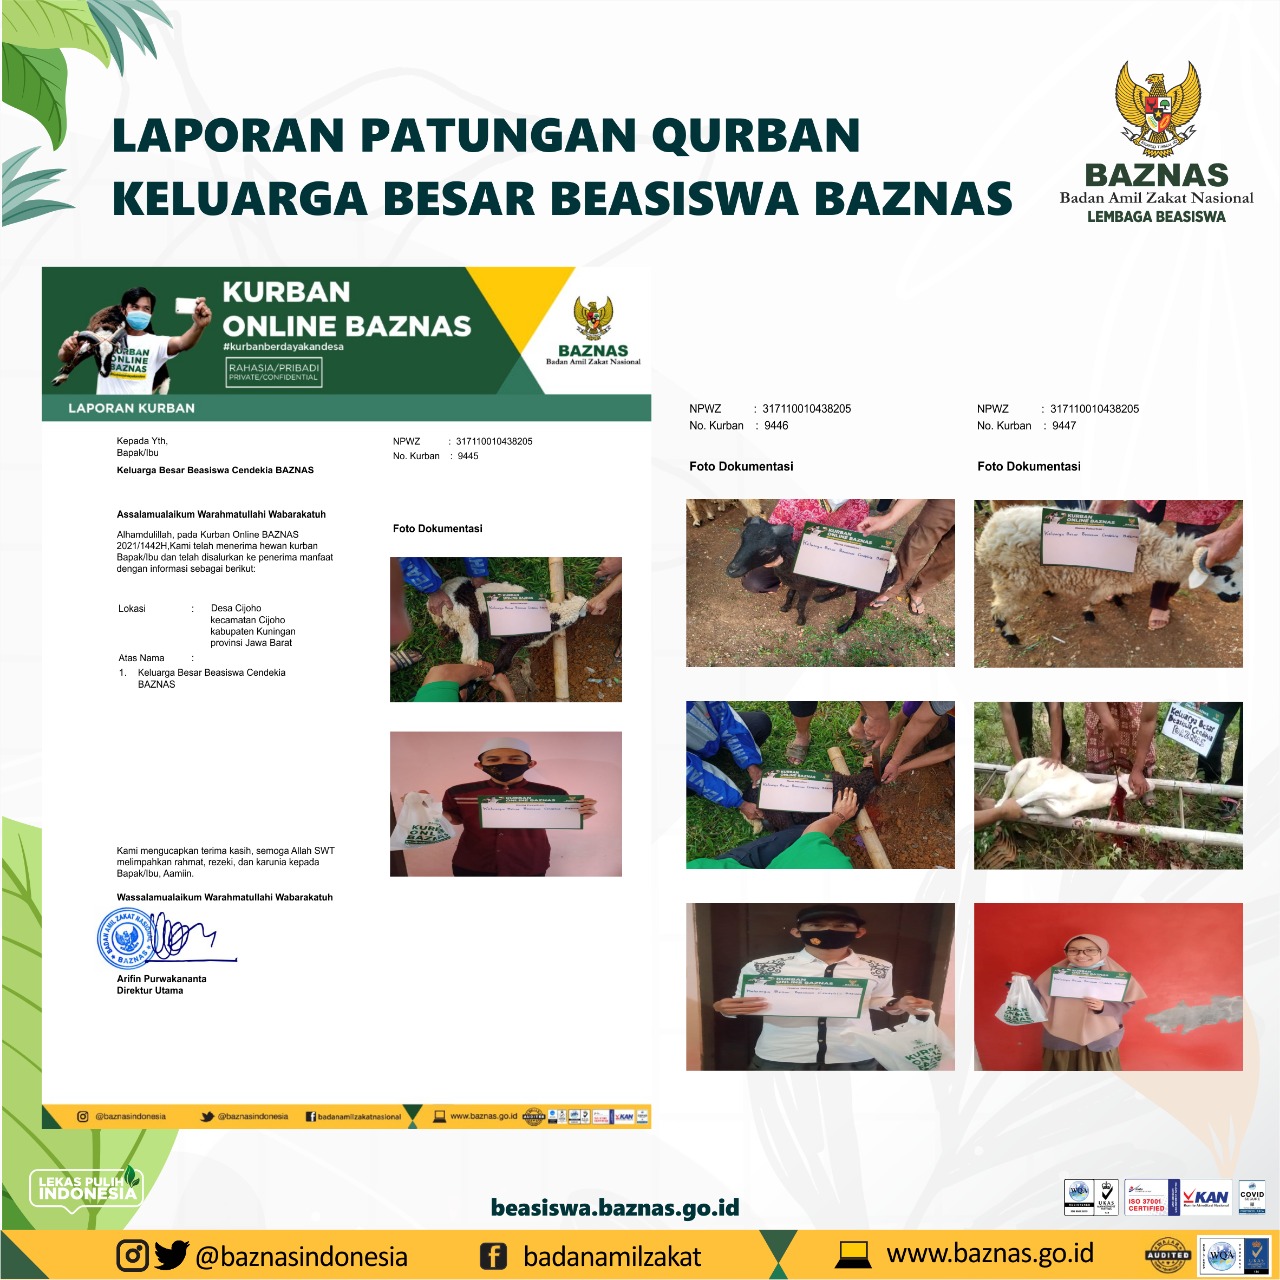 Penyaluran Qurban Online BAZNAS Bersama Peserta Beasiswa